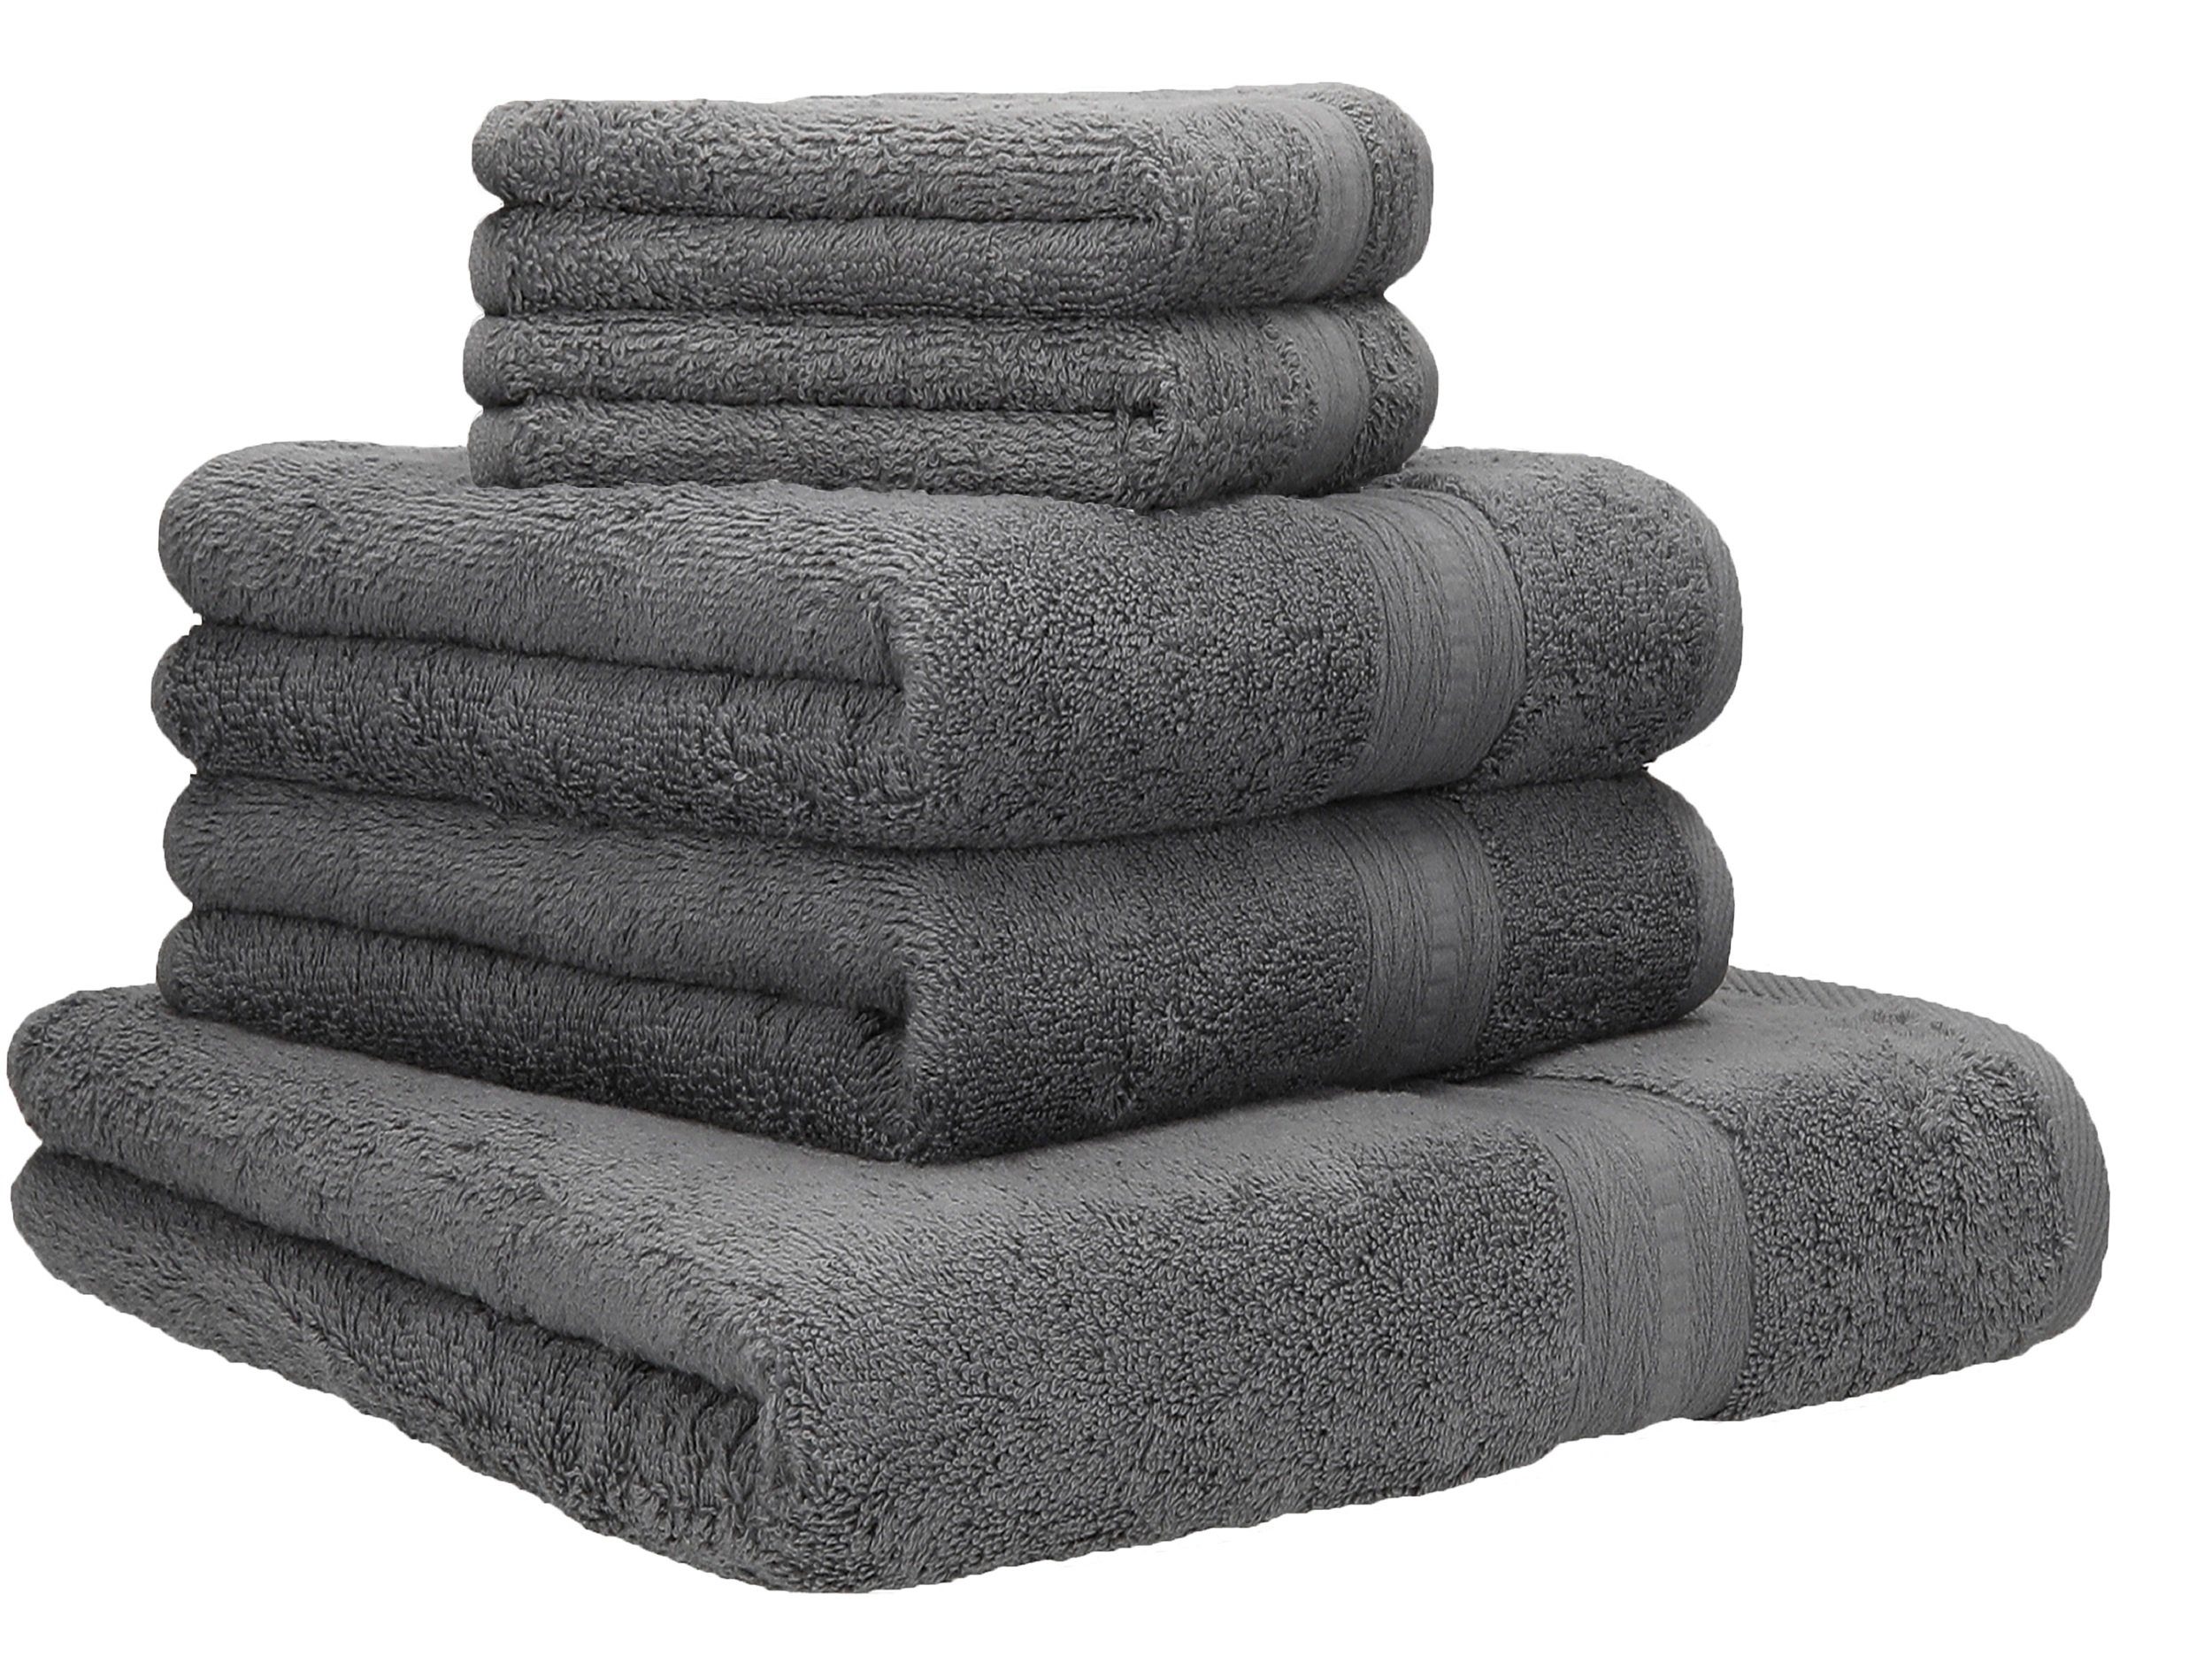 Betz Handtuch Set 5-TLG. Handtuch-Set GOLD 100% Baumwolle Qualität 600 g/m²  1 Duschtuch 2 Handtücher 2 Seiftücher Farbe anthrazit, 100% Baumwolle